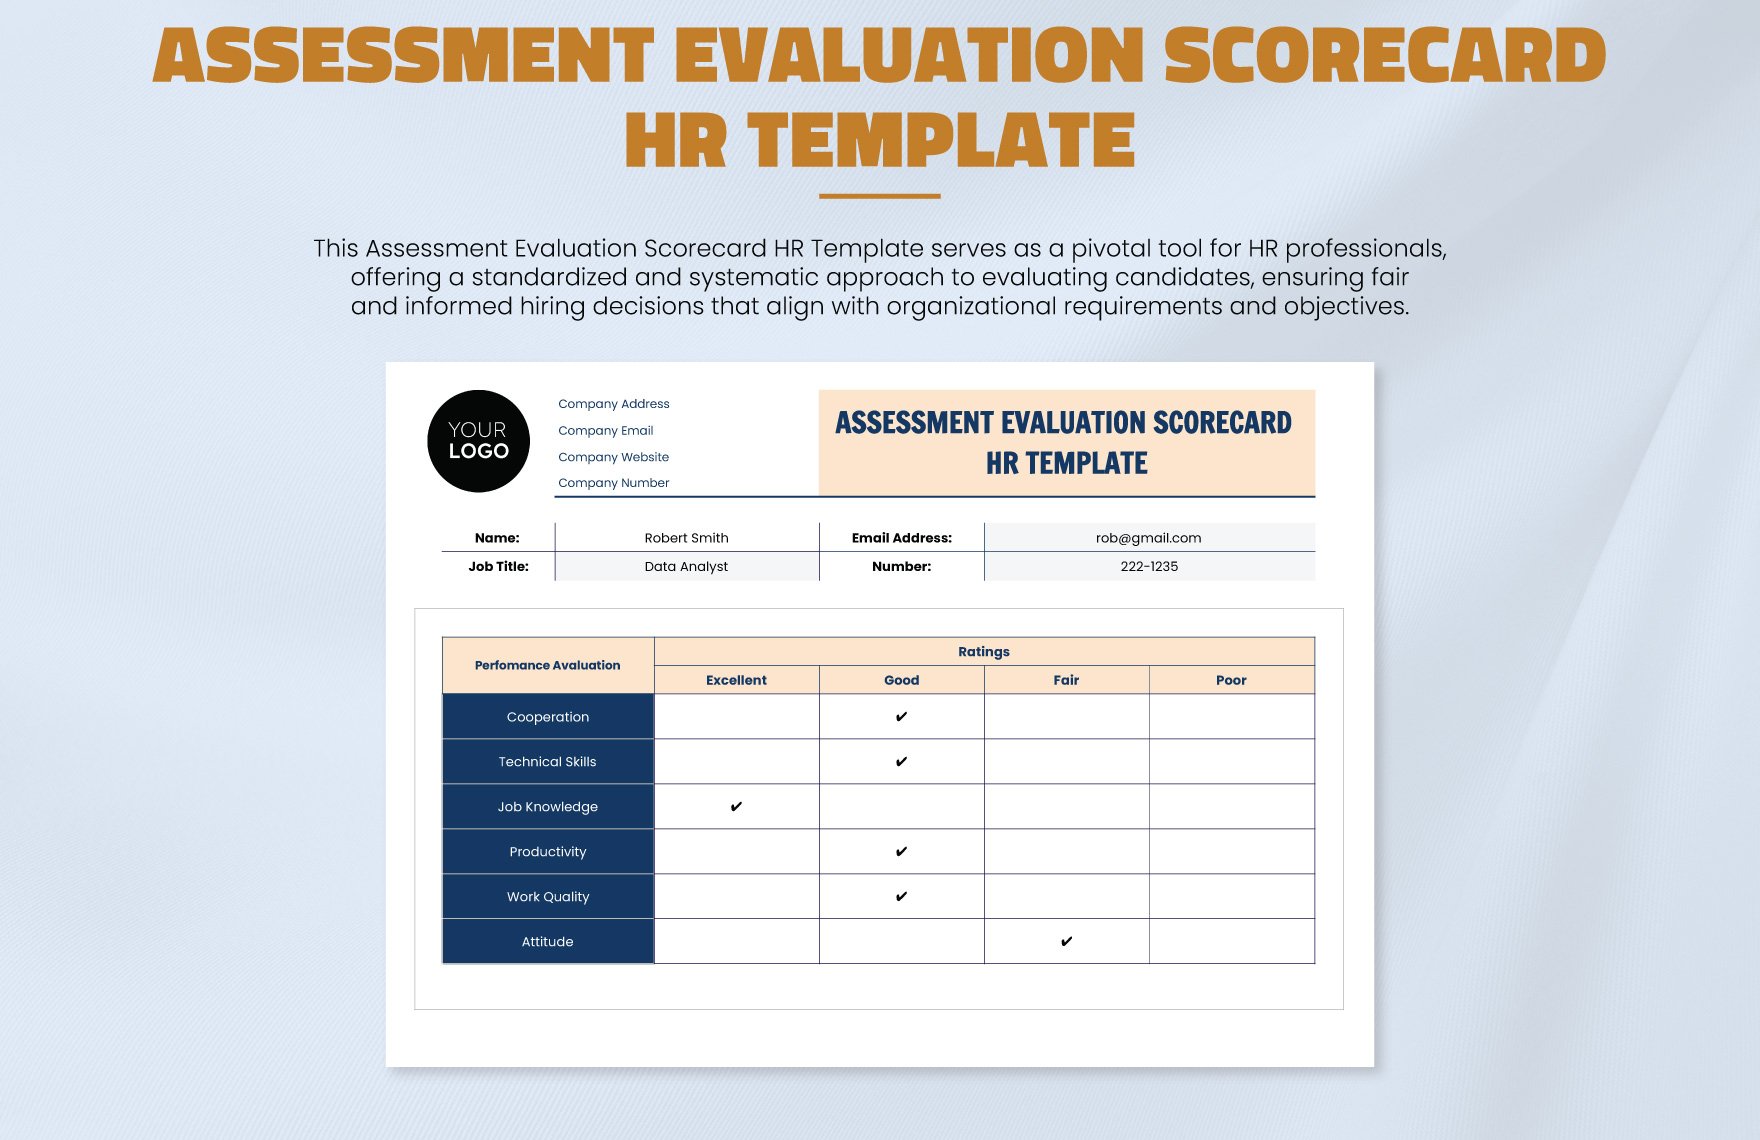 Assessment Evaluation Scorecard HR Template